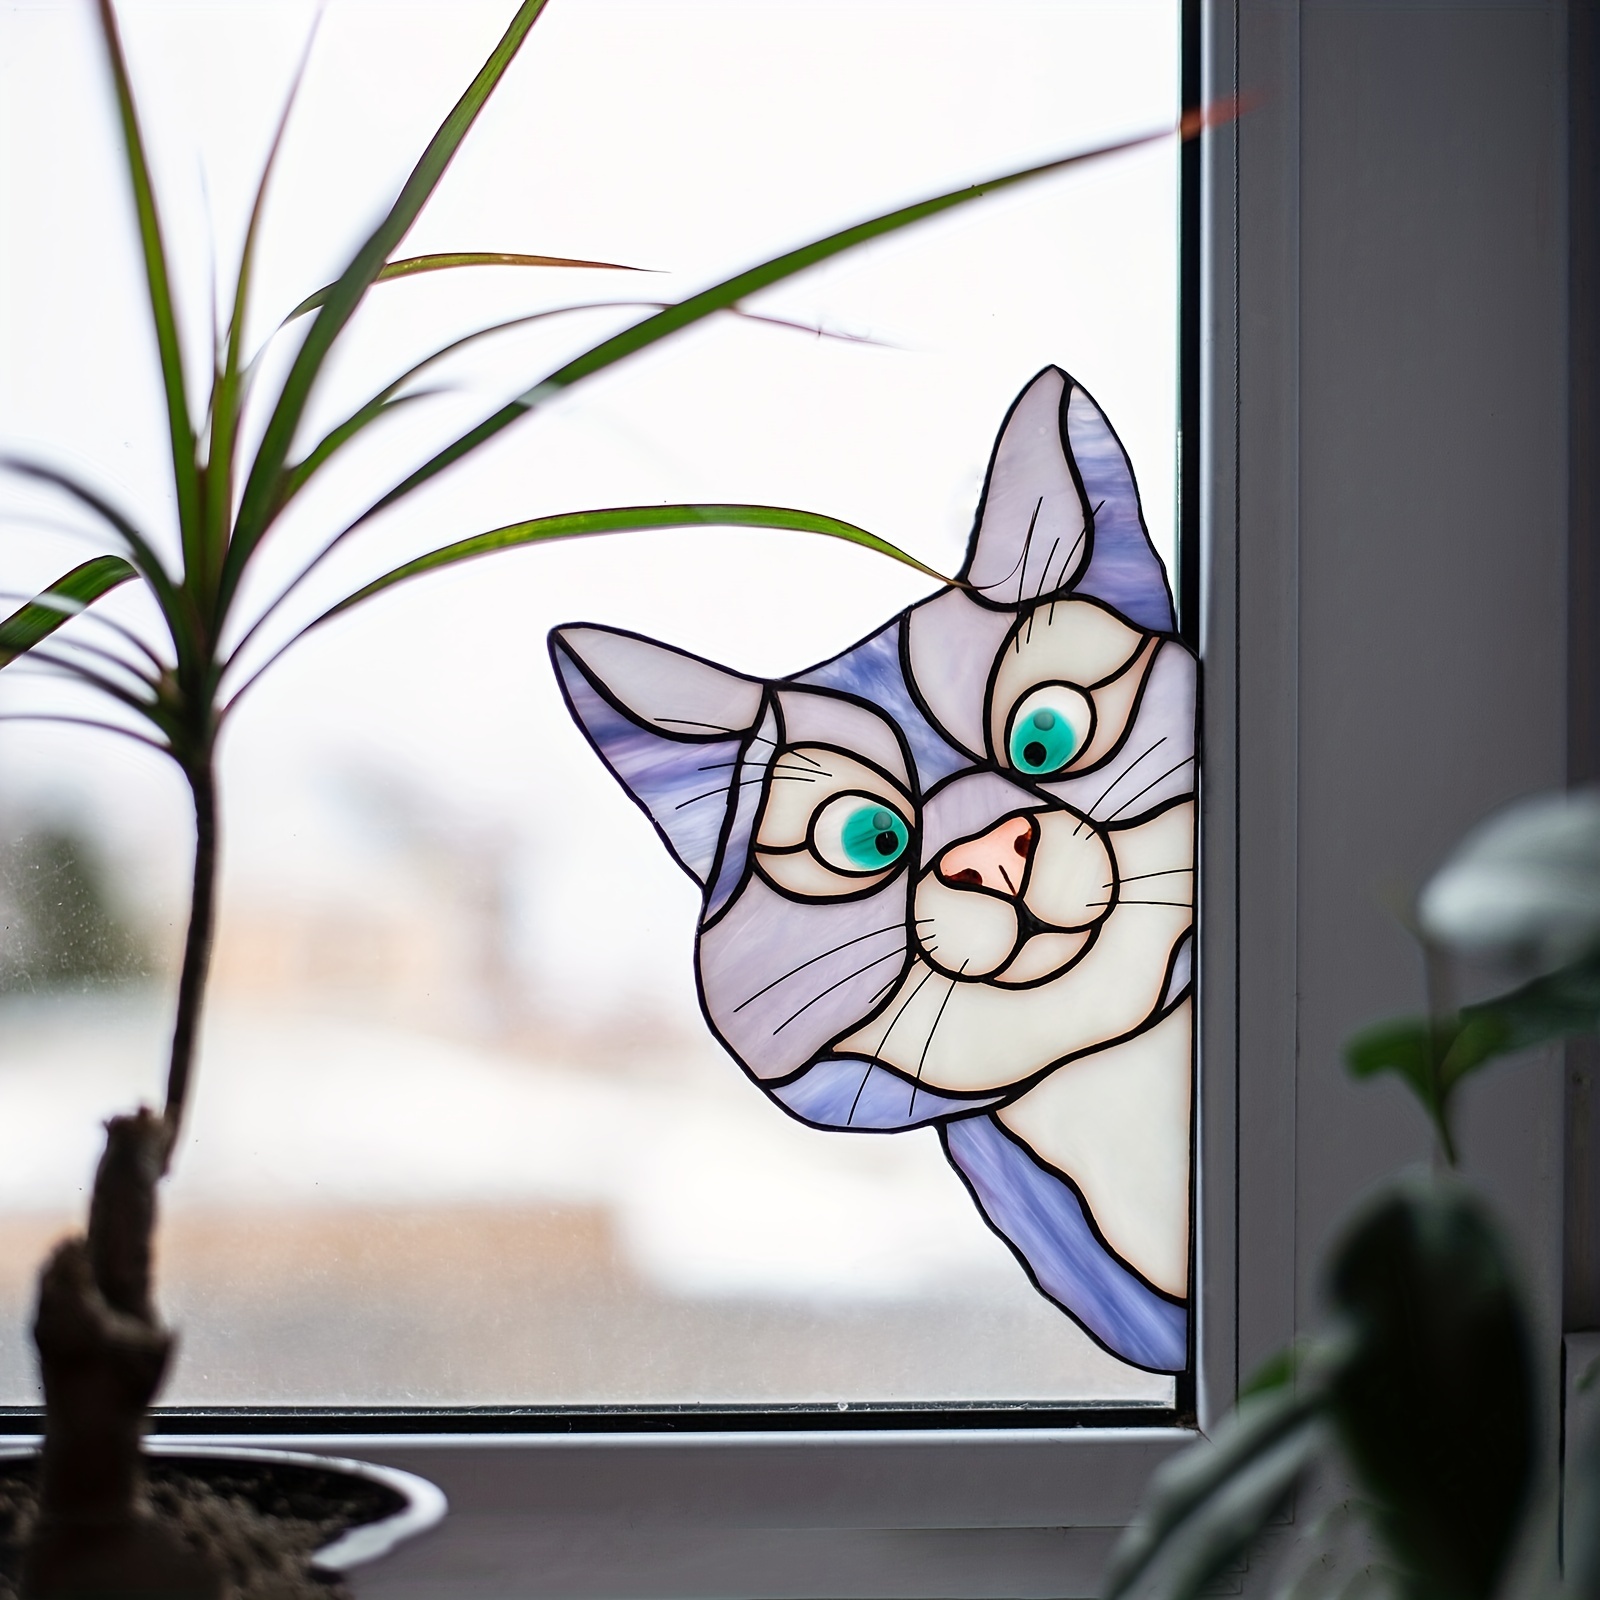 5PCS Car Body Sticker Cat Wall Decals 3D Cute Cat Stickers For Window Bumper